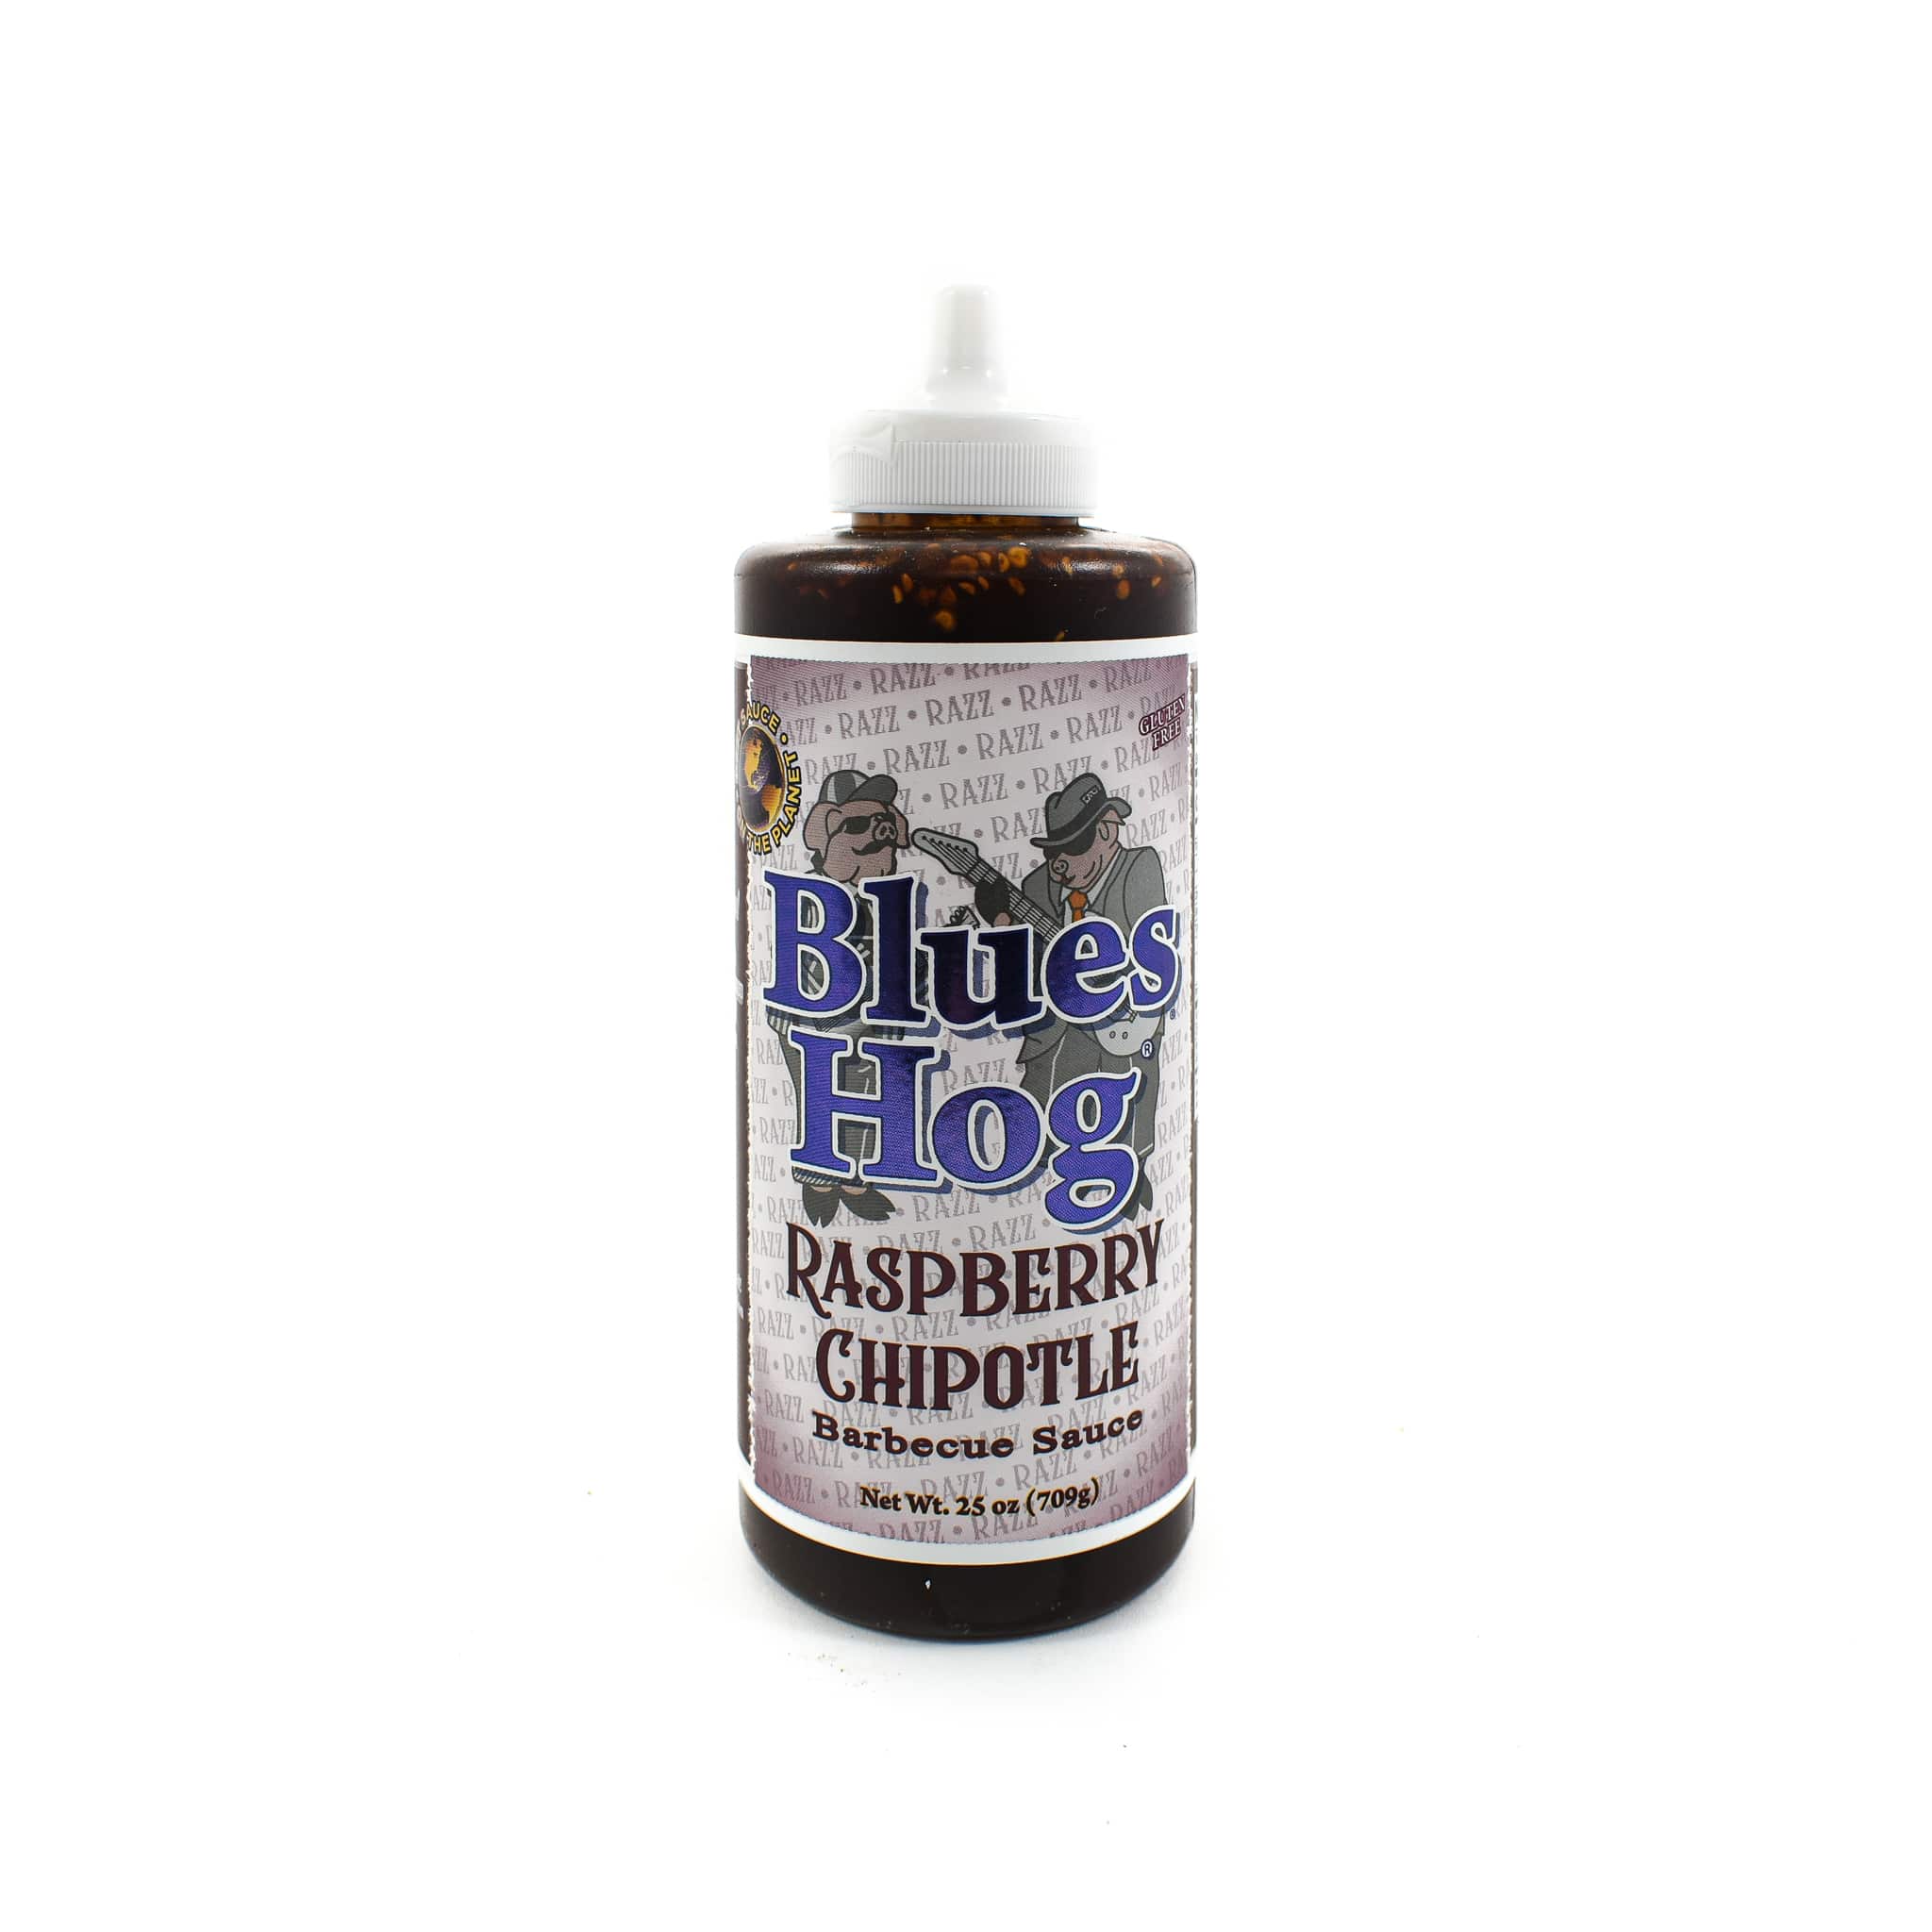 Blues Hog Raspberry Chipotle BBQ Sauce 708g bottle front